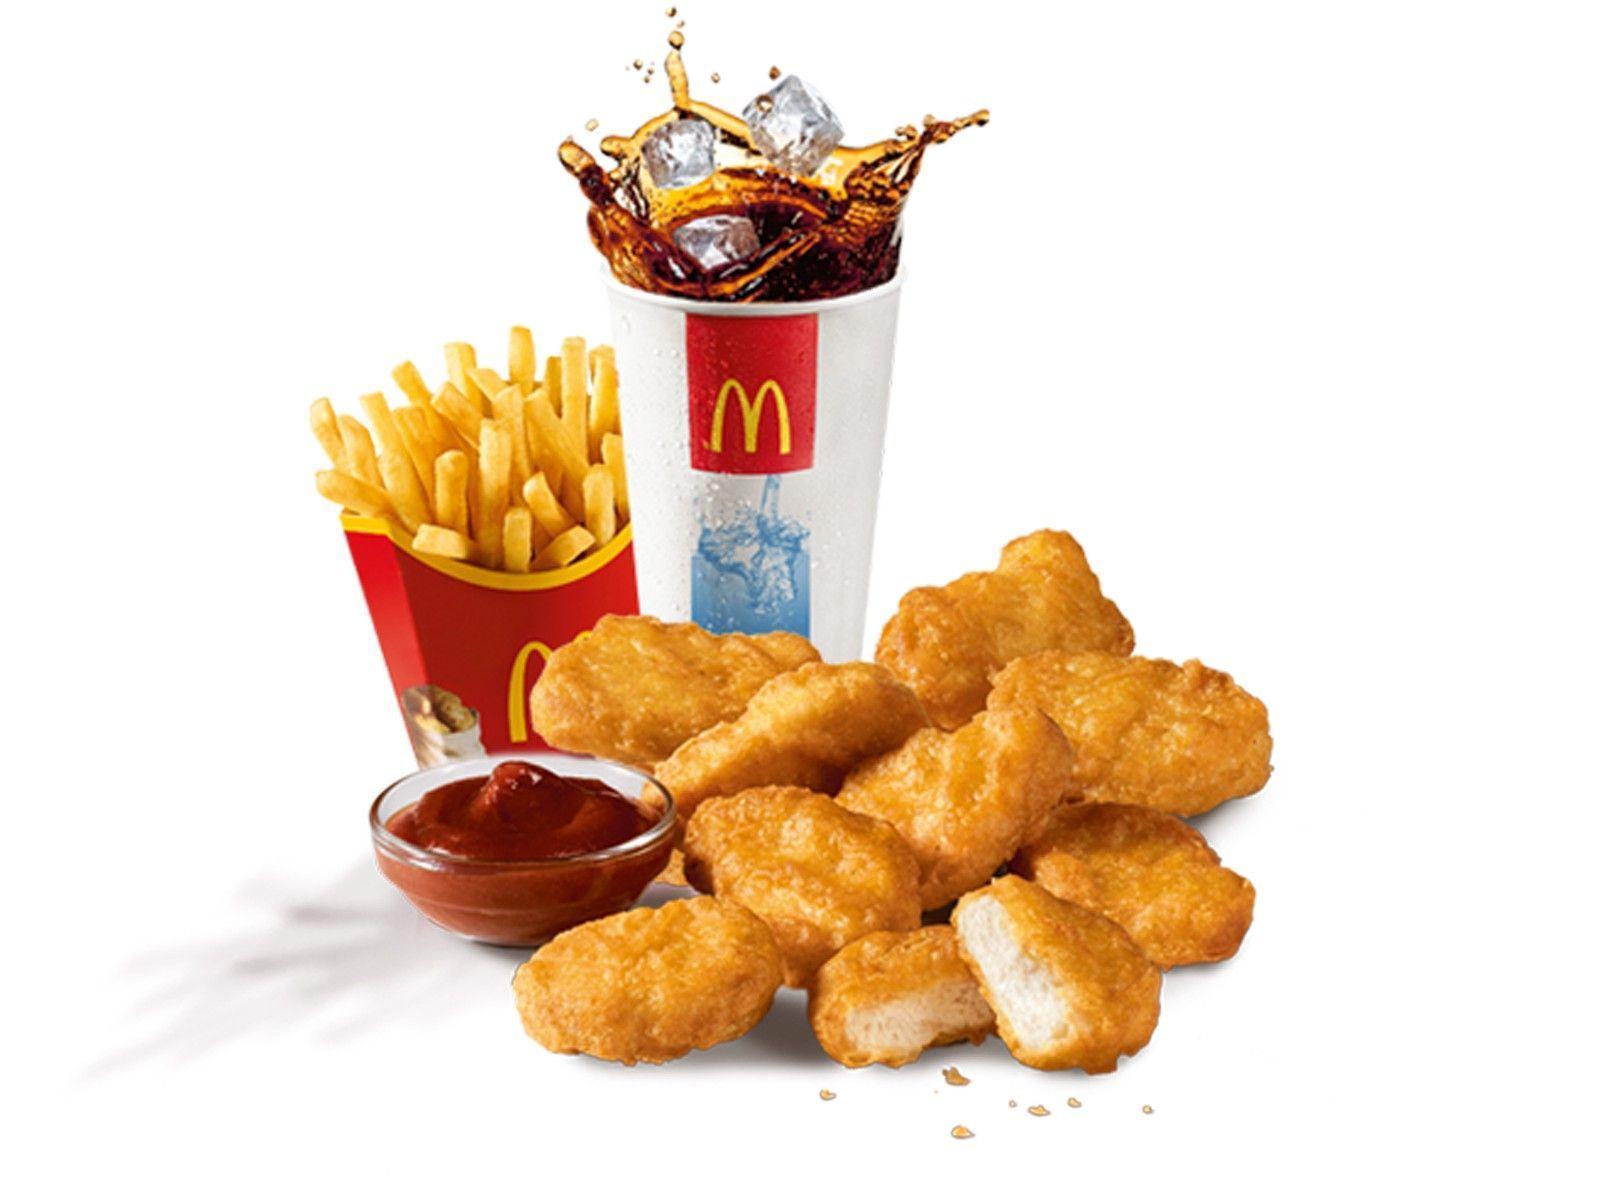 best image about McDonalds. The 90s, Big mac